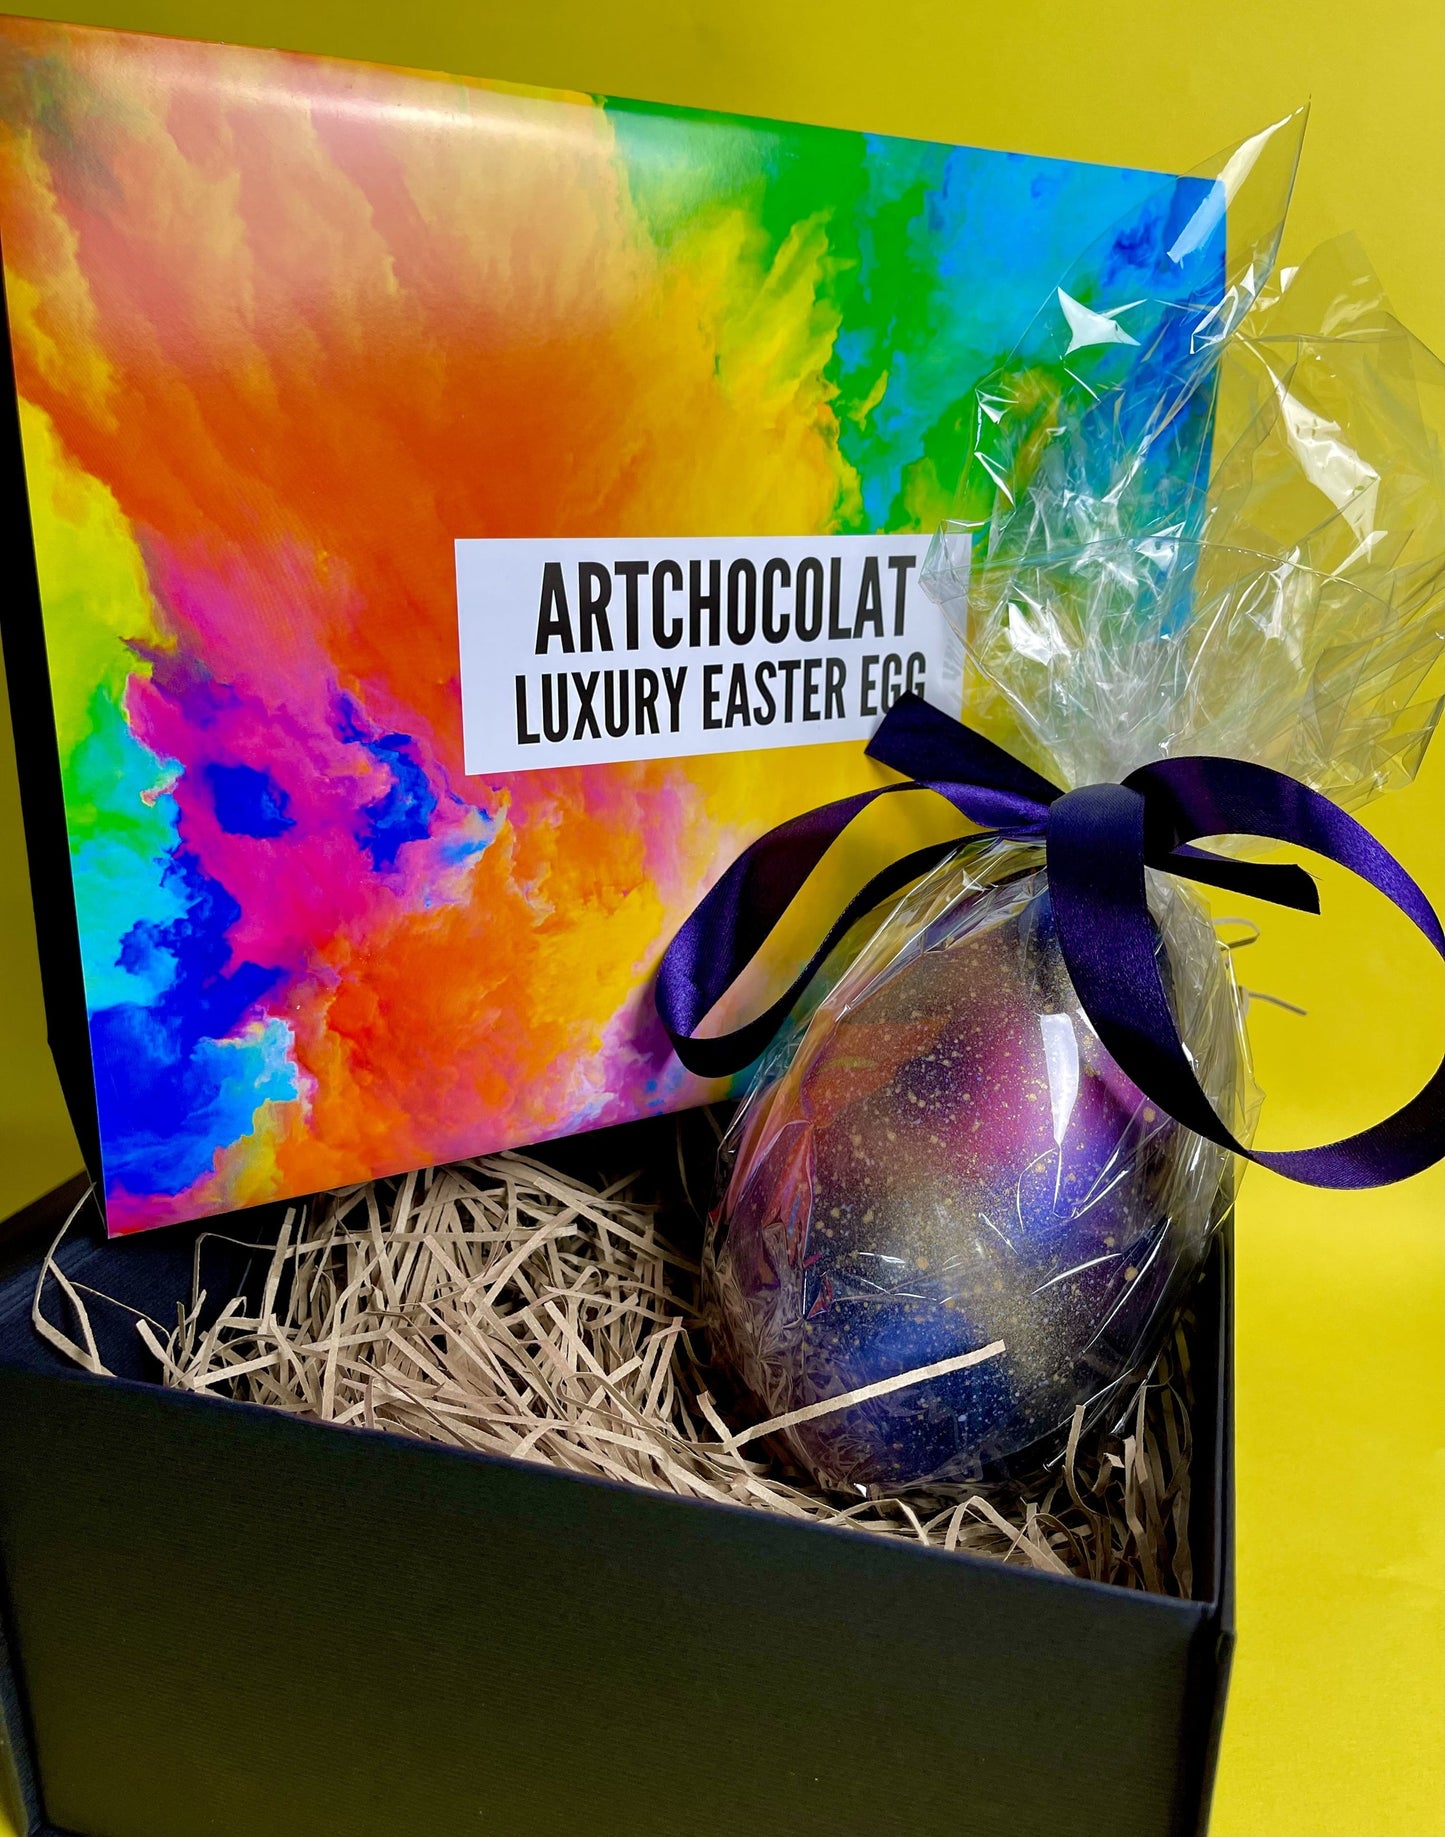 The ArtChocolat Luxury Easter Egg